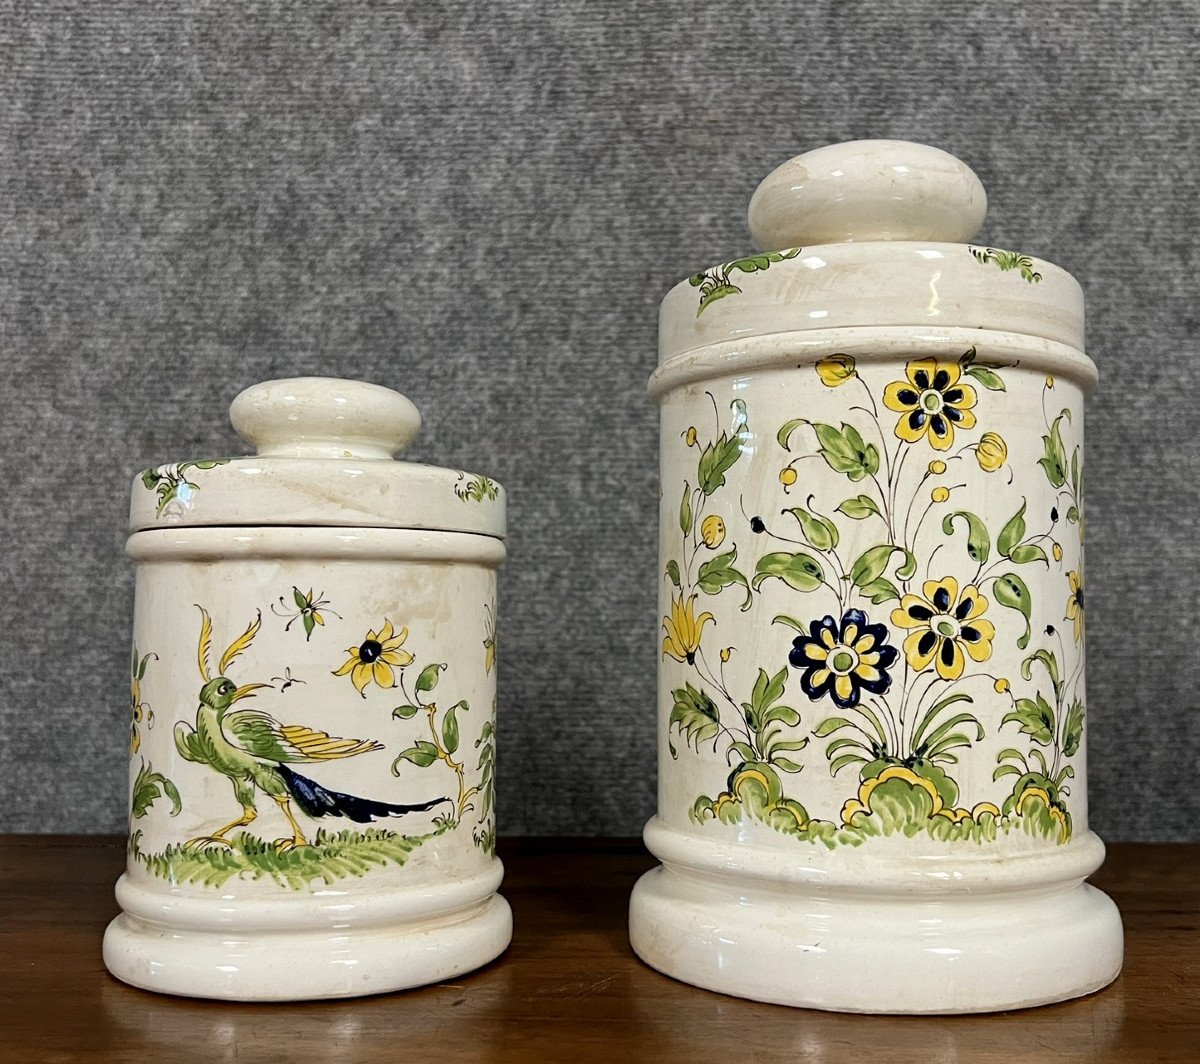 Moustiers 20th Century: 2 Porcelain Bomb Pots With Hand-painted Decor